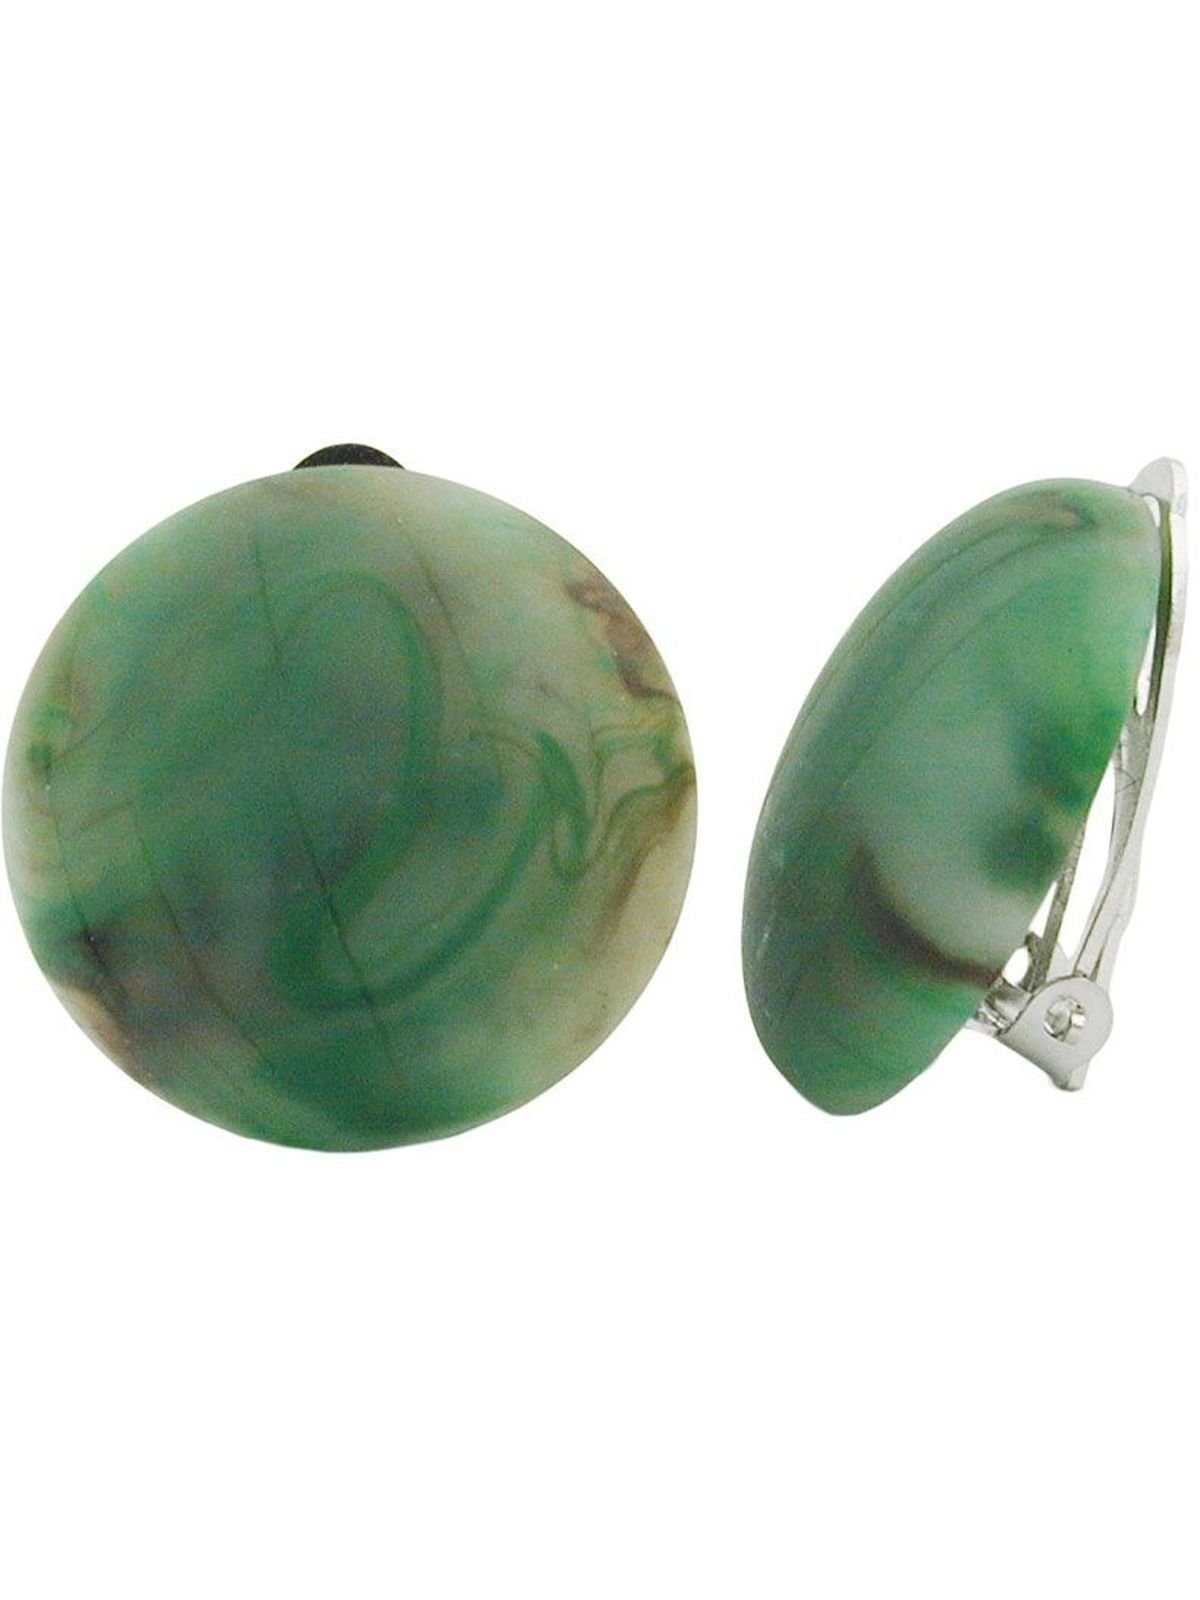 Kunststoff-Bouton Paar Ohrring Gallay grün-braun-marmoriert Riss matt (1-tlg) Ohrclips 22mm